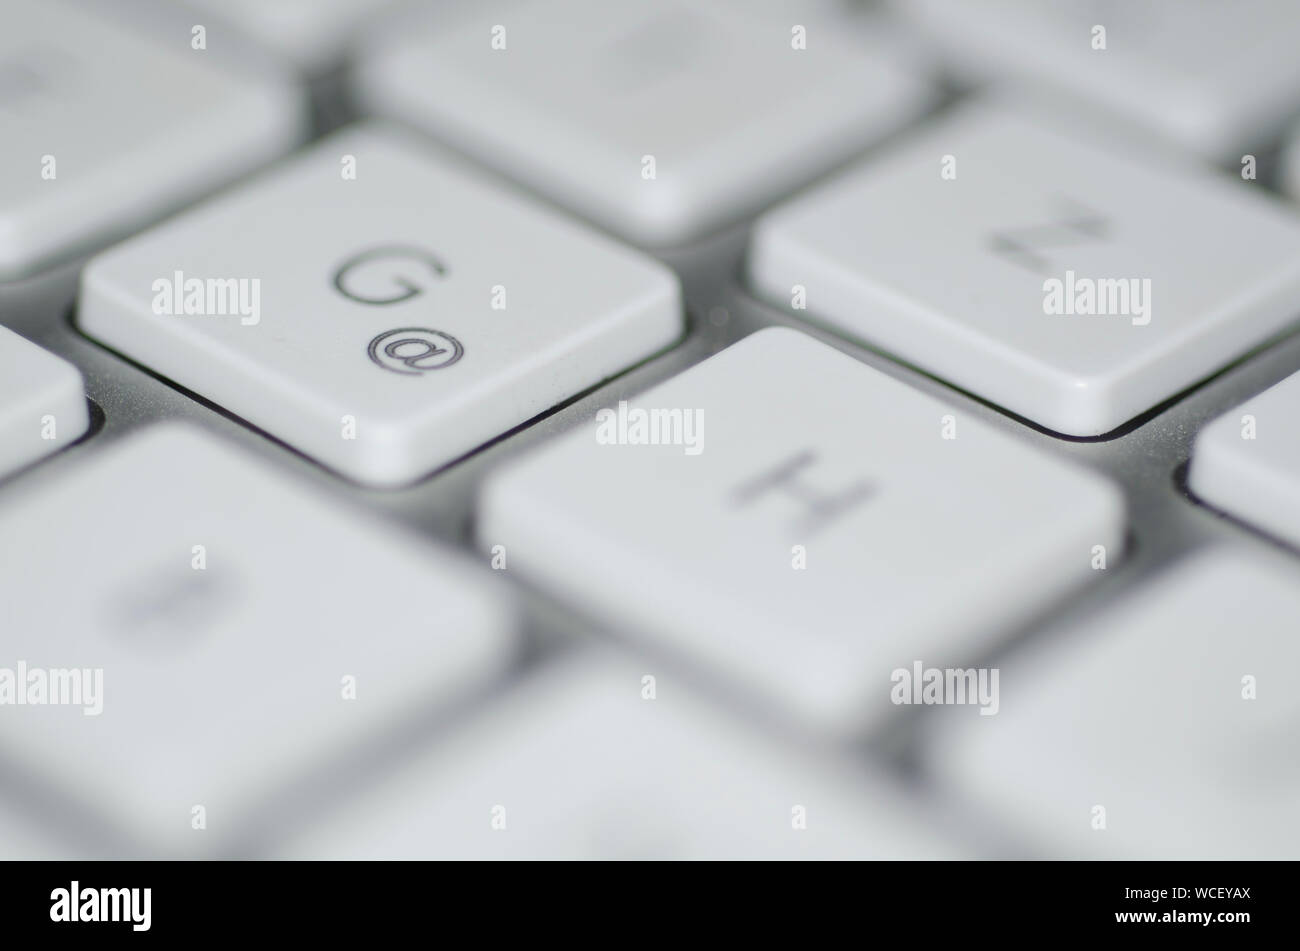 Close-up Of Symbol On Keys Of Keyboards Stock Photo